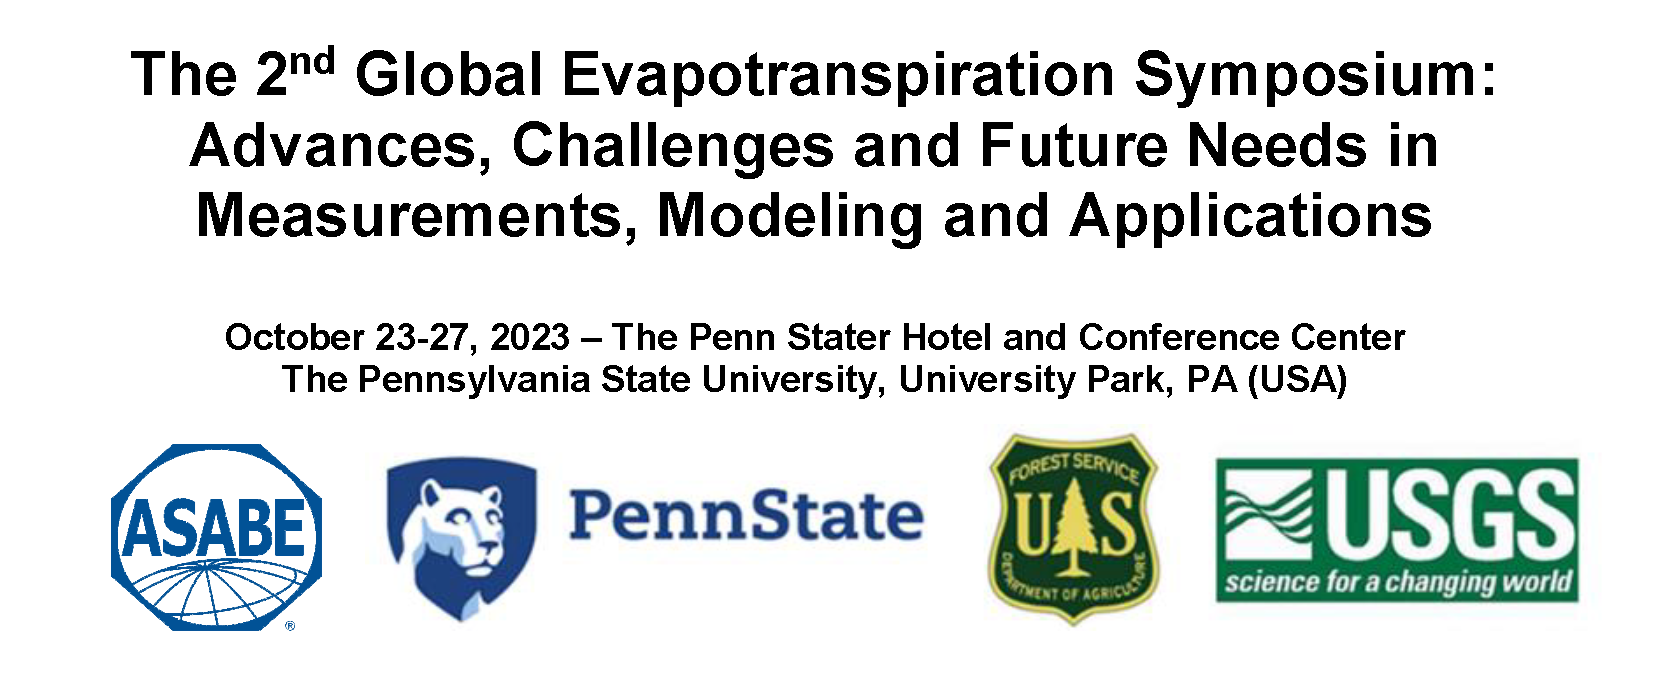 The 2nd Global Evapotranspiration Symposium